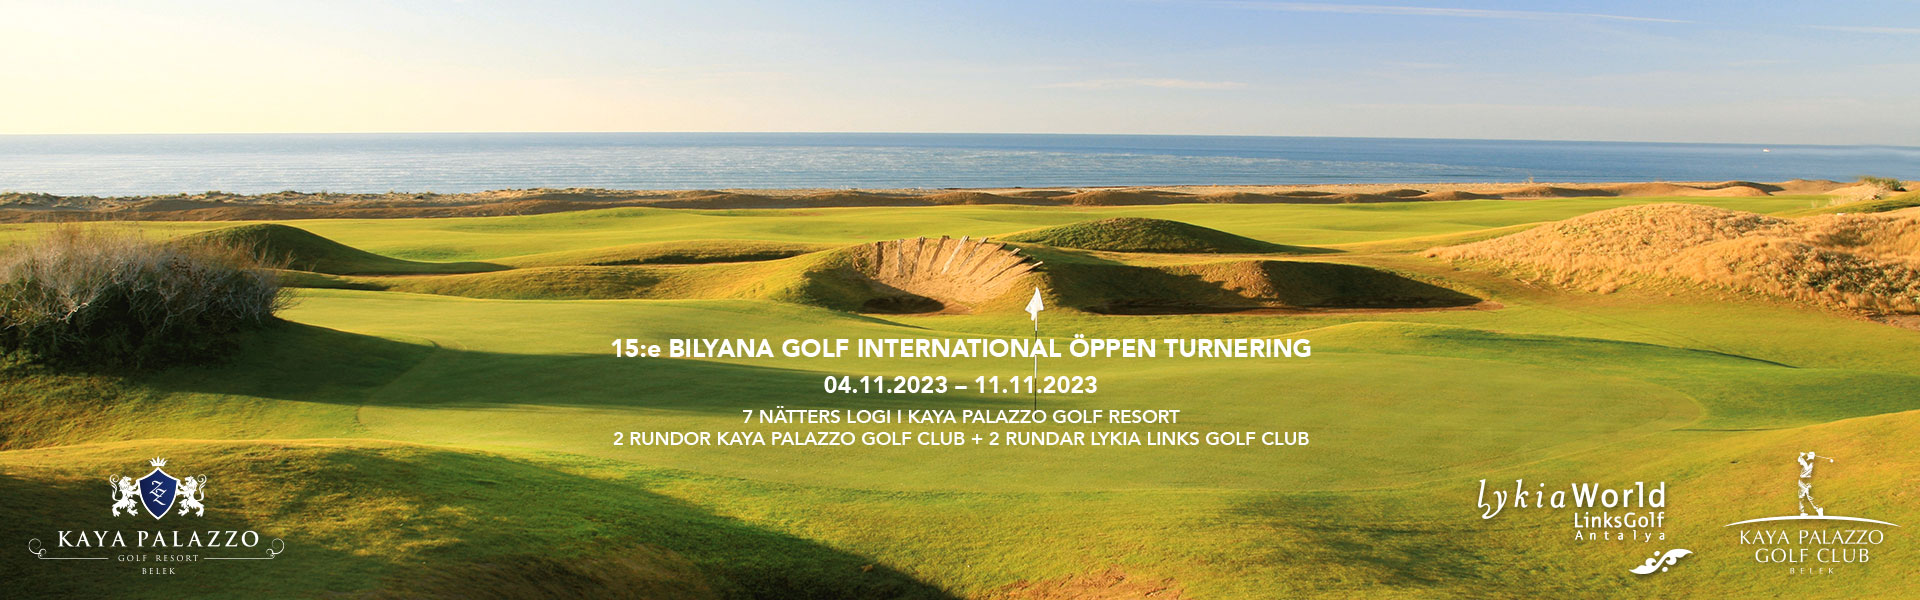 Bilyana Golf - 15Th BILYANA GOLF INTERNATIONELL TURNERING